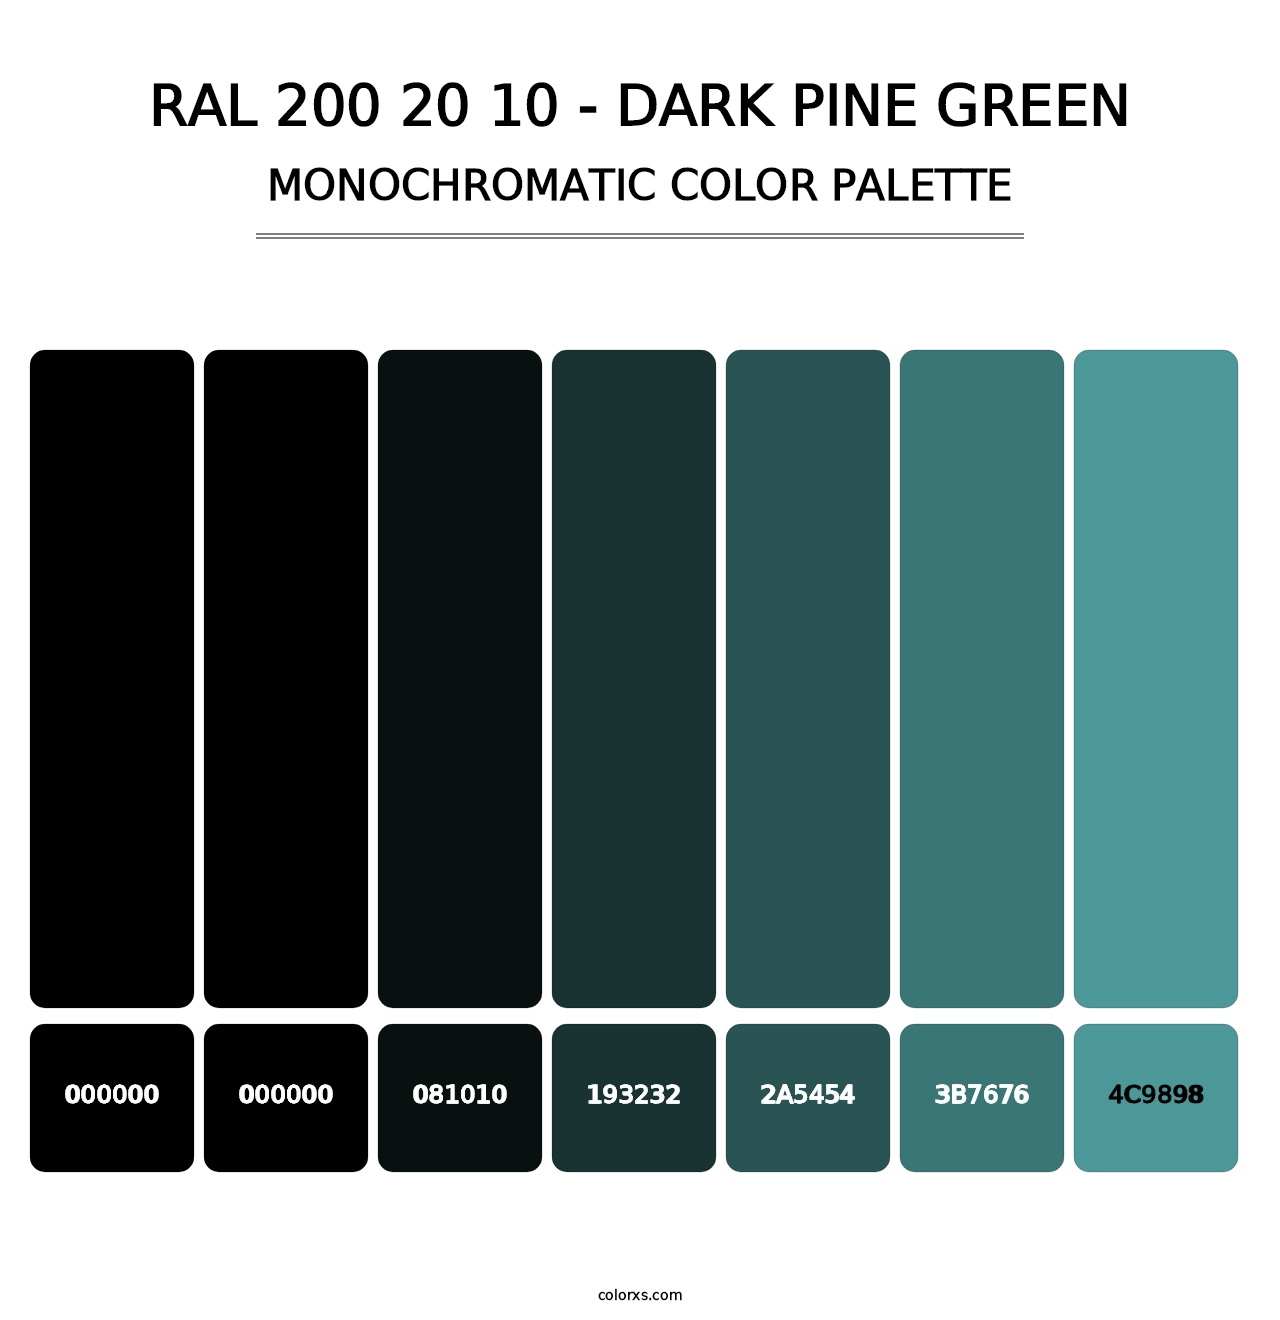 RAL 200 20 10 - Dark Pine Green - Monochromatic Color Palette